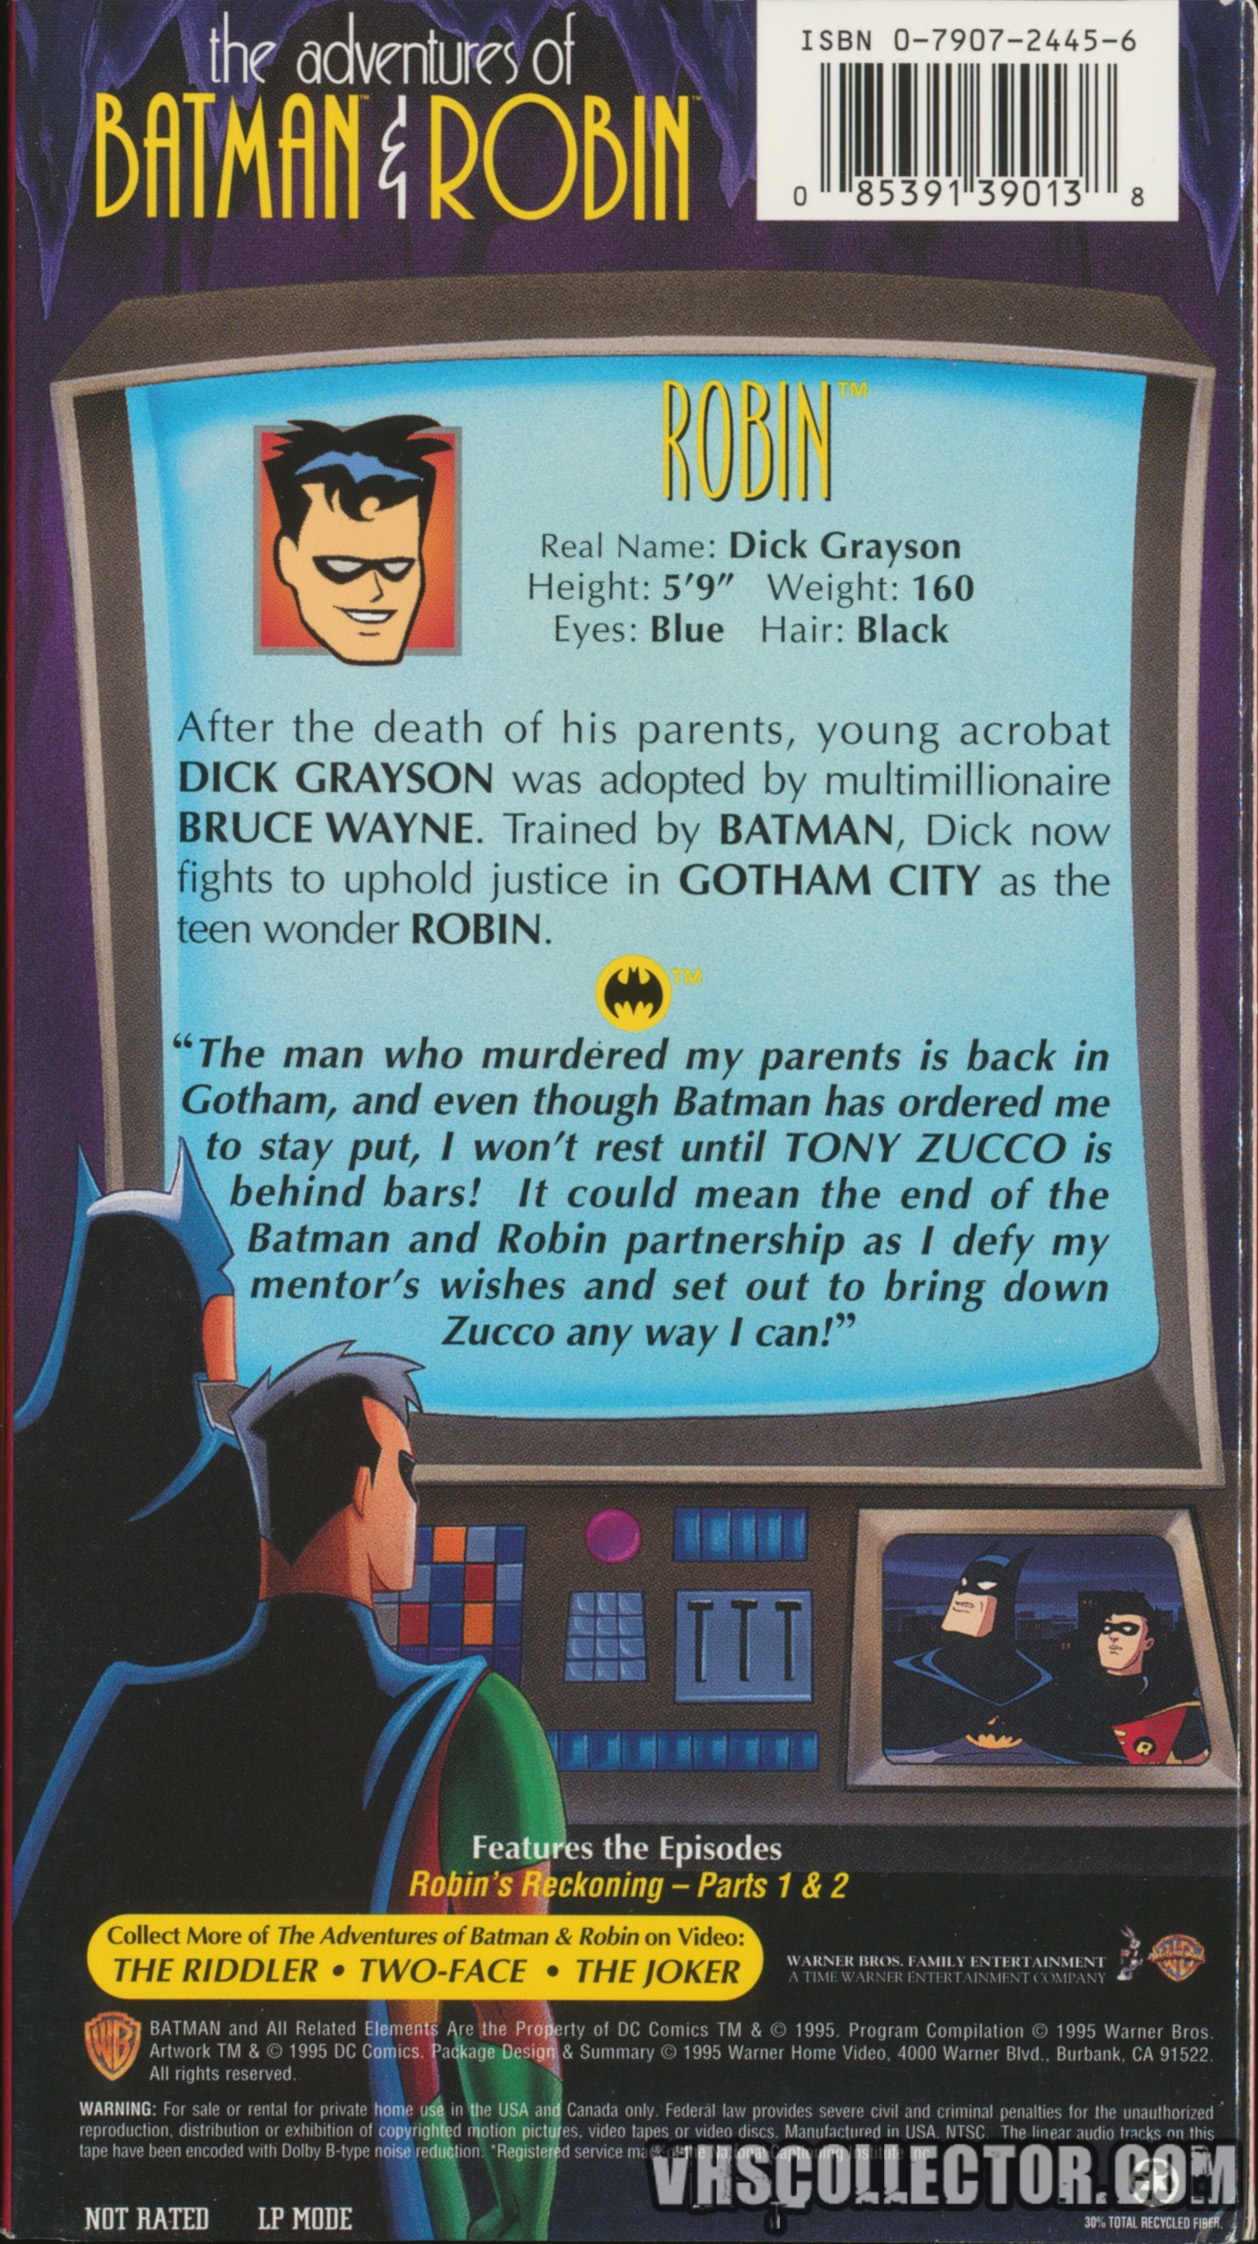 The Adventures of Batman & Robin: Robin | VHSCollector.com